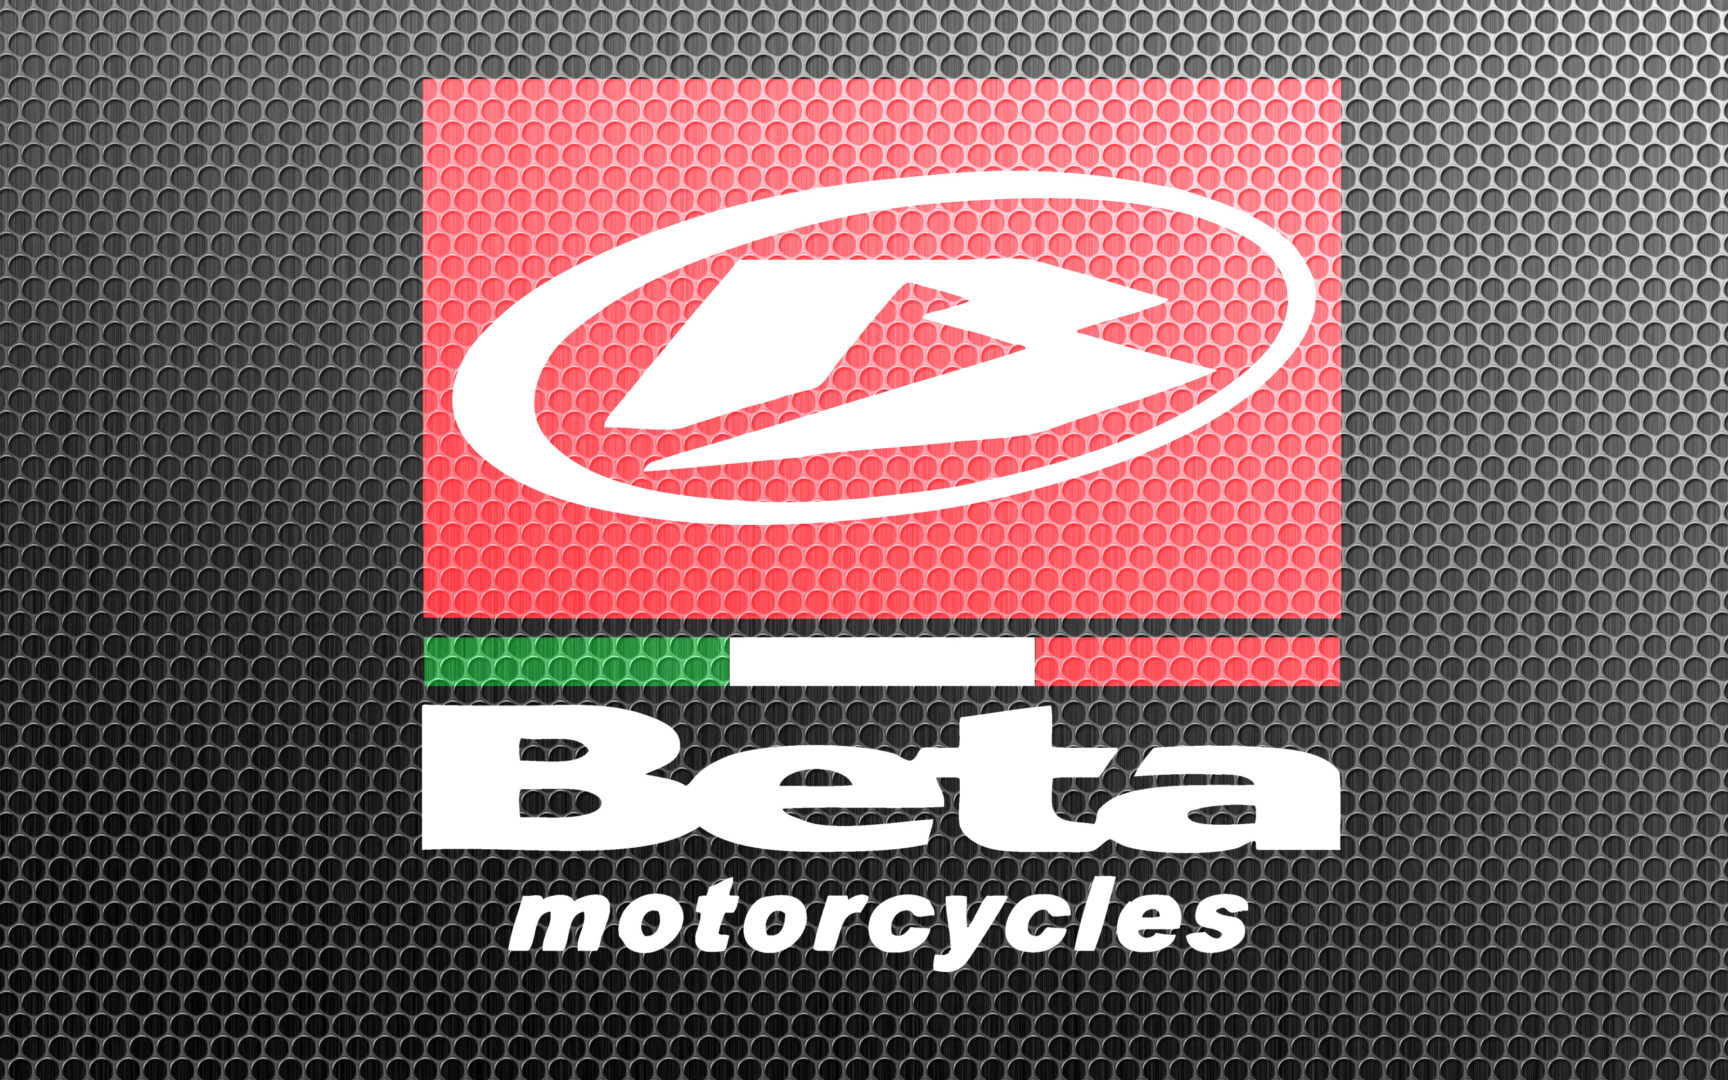 Beta emblem